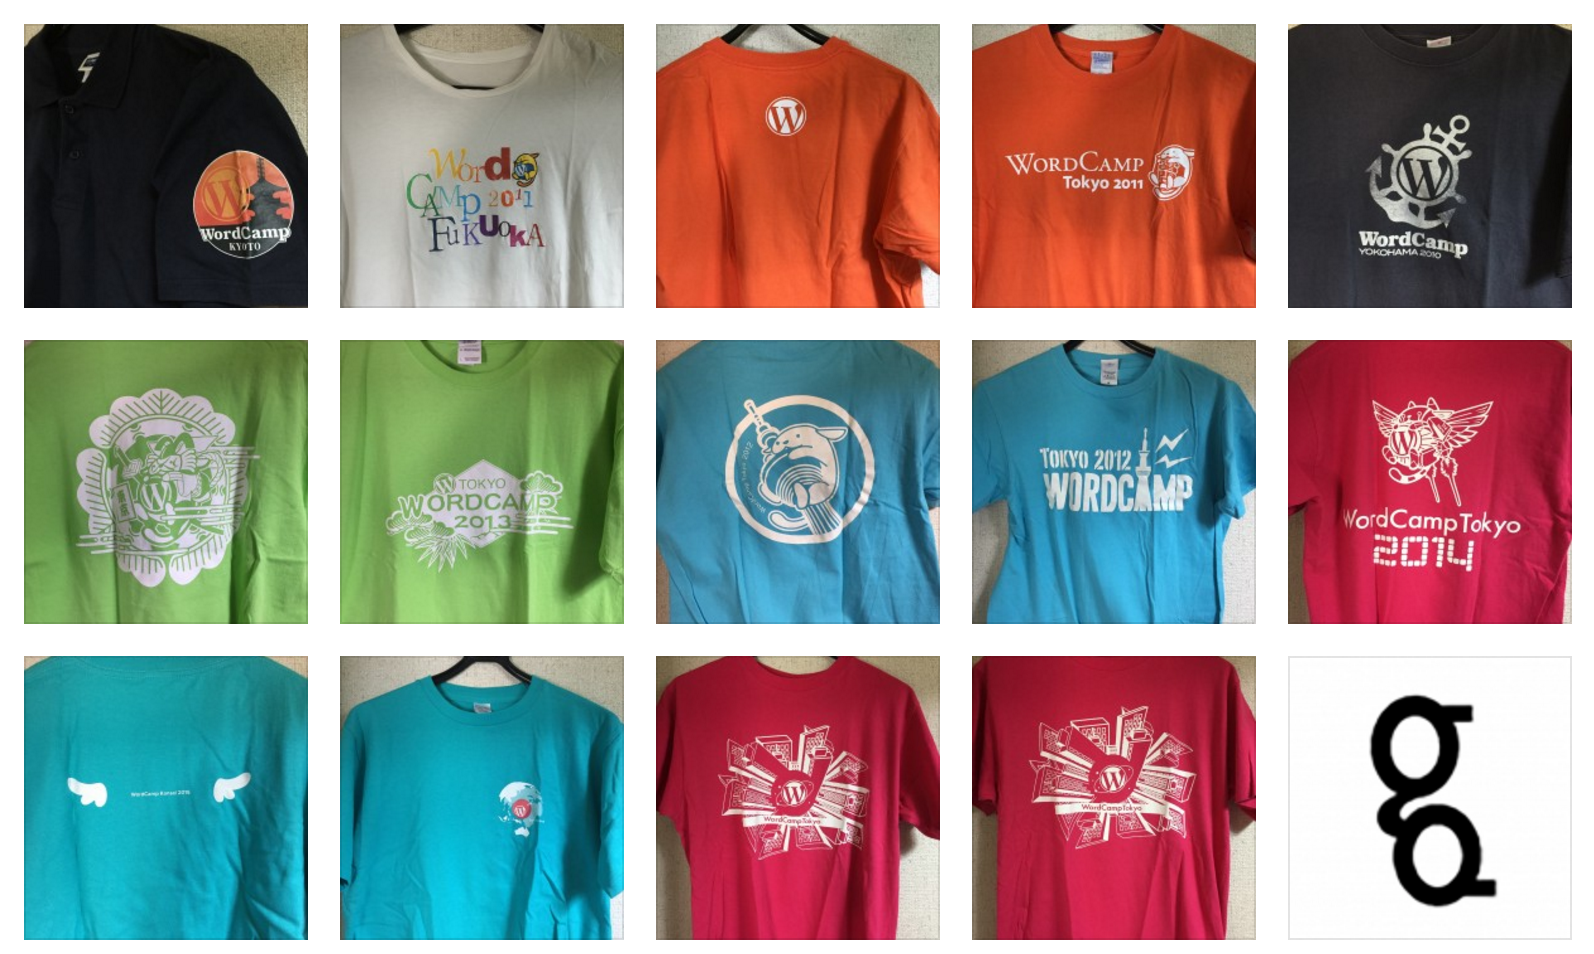 WordCamp 関連のTシャツを集めて掲載してみました。 (WordCamp Tokyo 2015 リレーブログ)